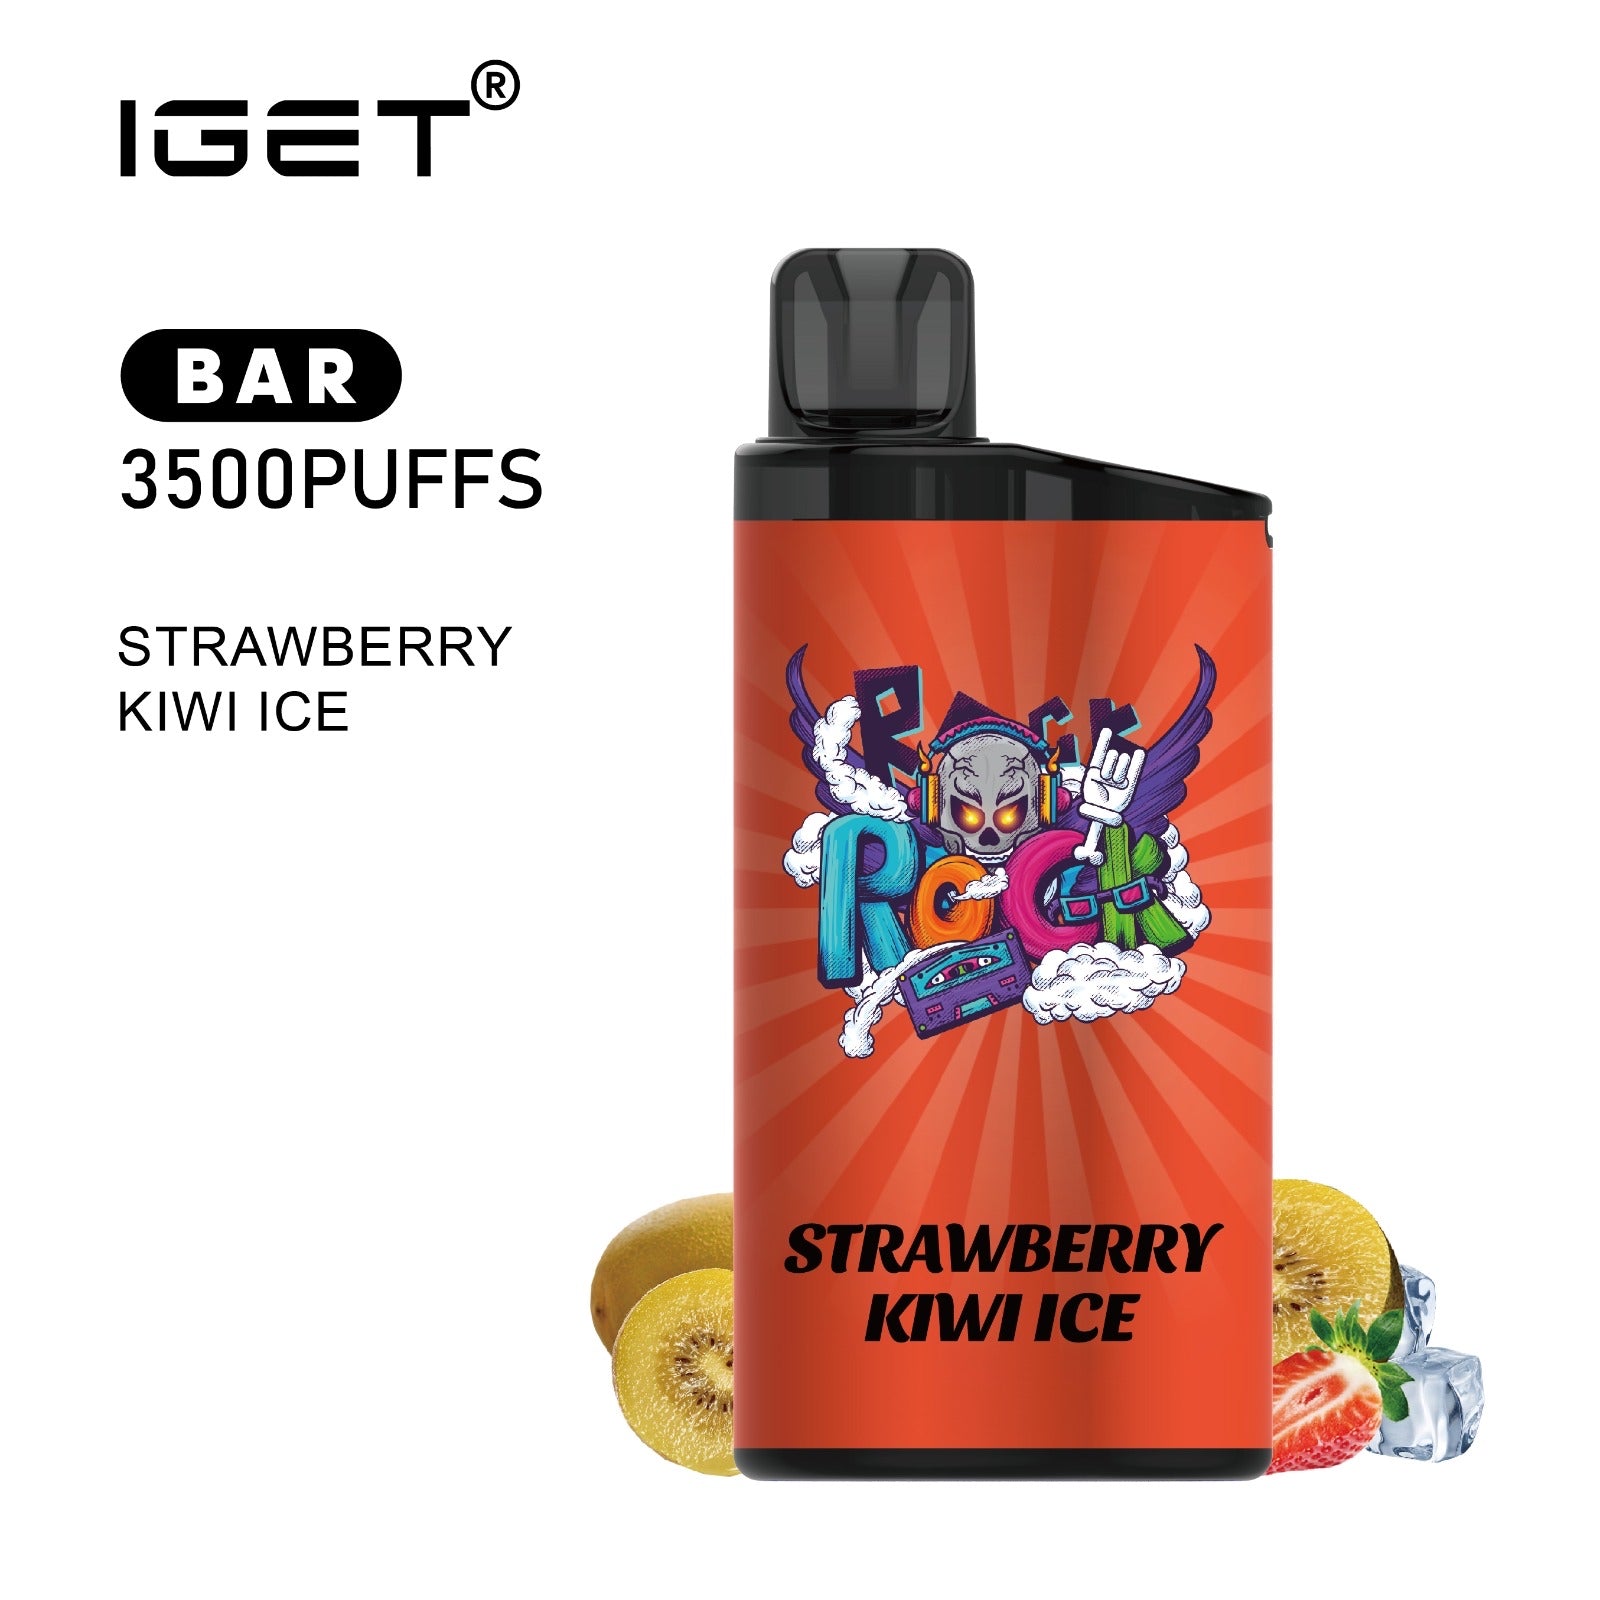 IGET BAR STRAWBERRY KIWI ICE 3500 PUFFS